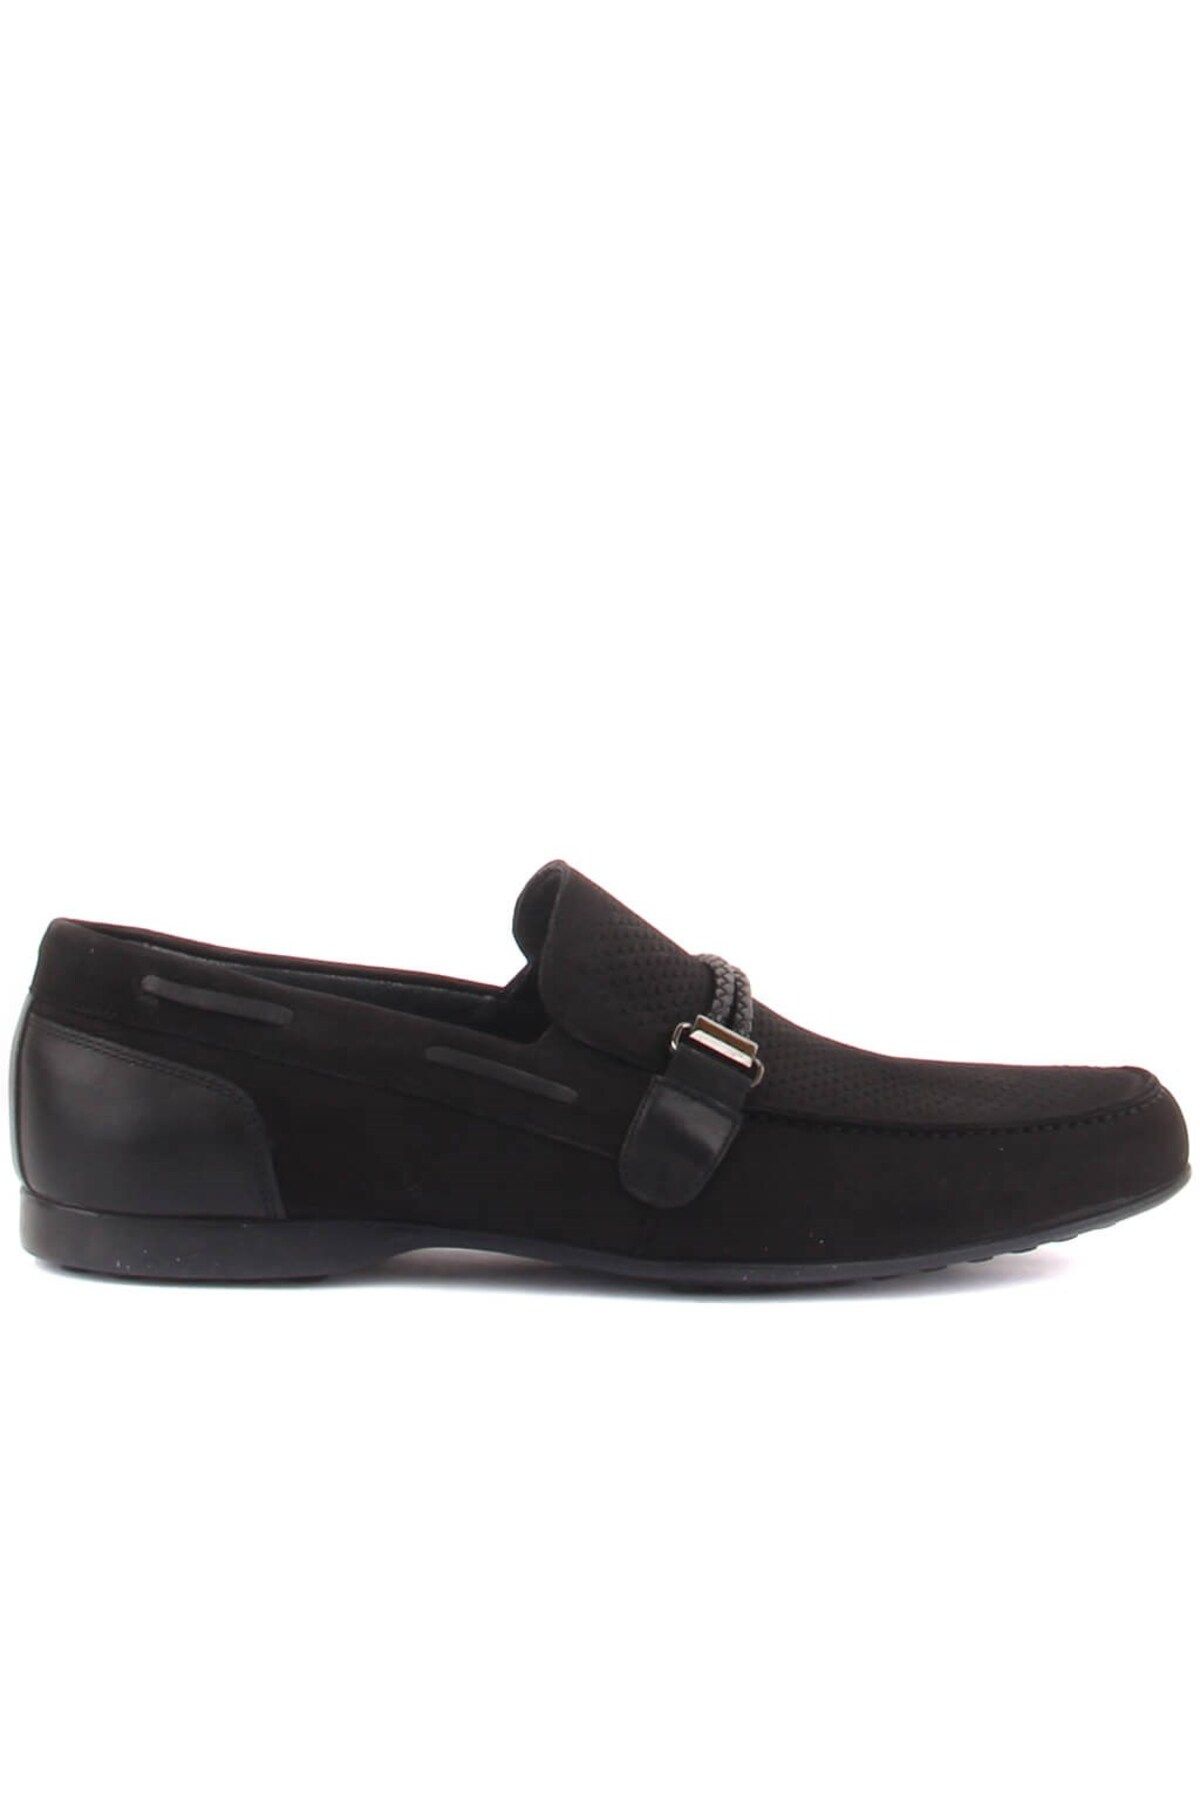 Sail Lakers Fosco - Siyah Nubuk Deri Erkek Klasik Ayakkabı